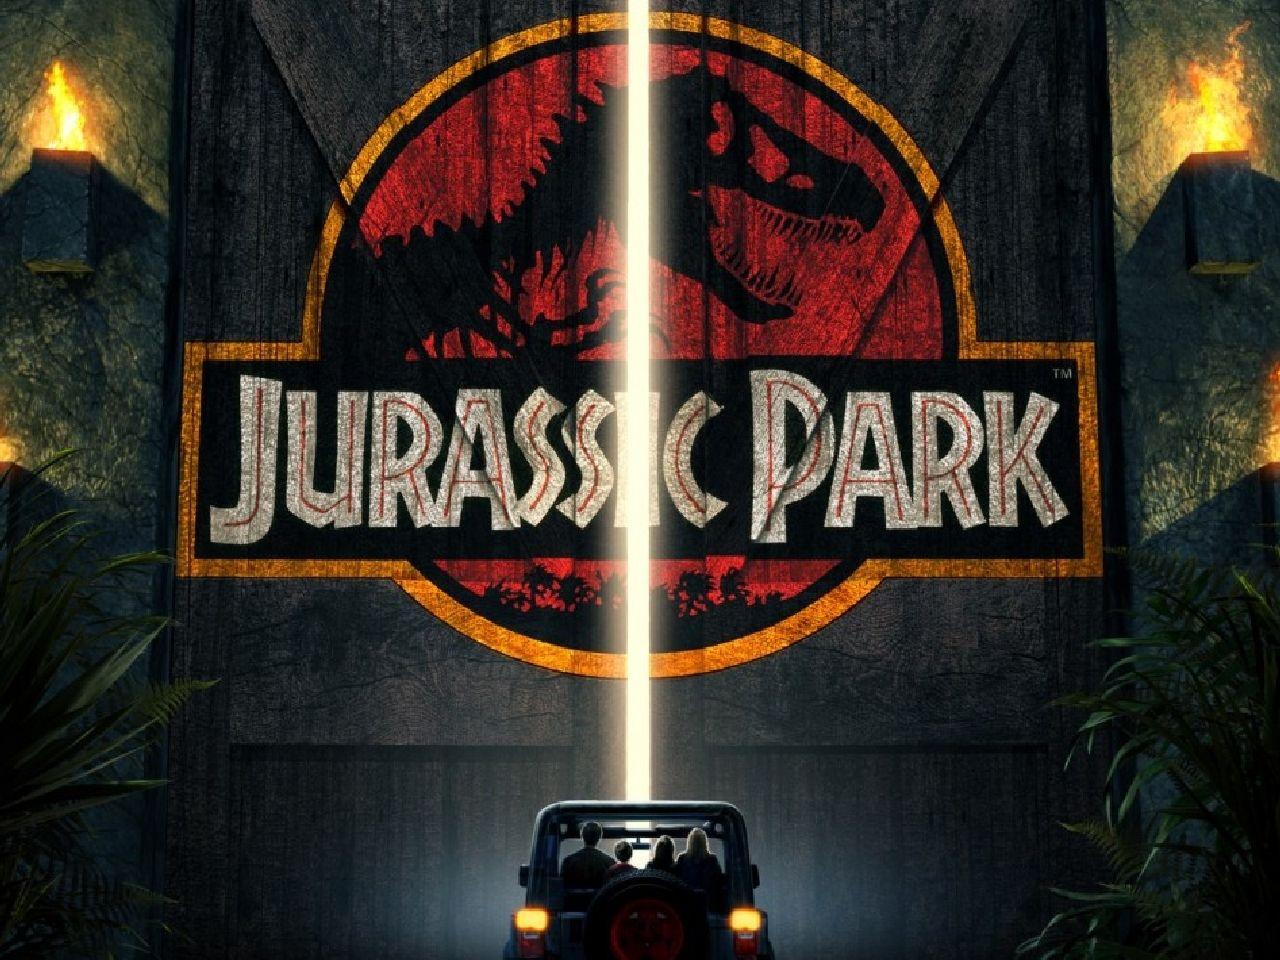 Jurassic World 4k Wallpapers Top Free Jurassic World 4k